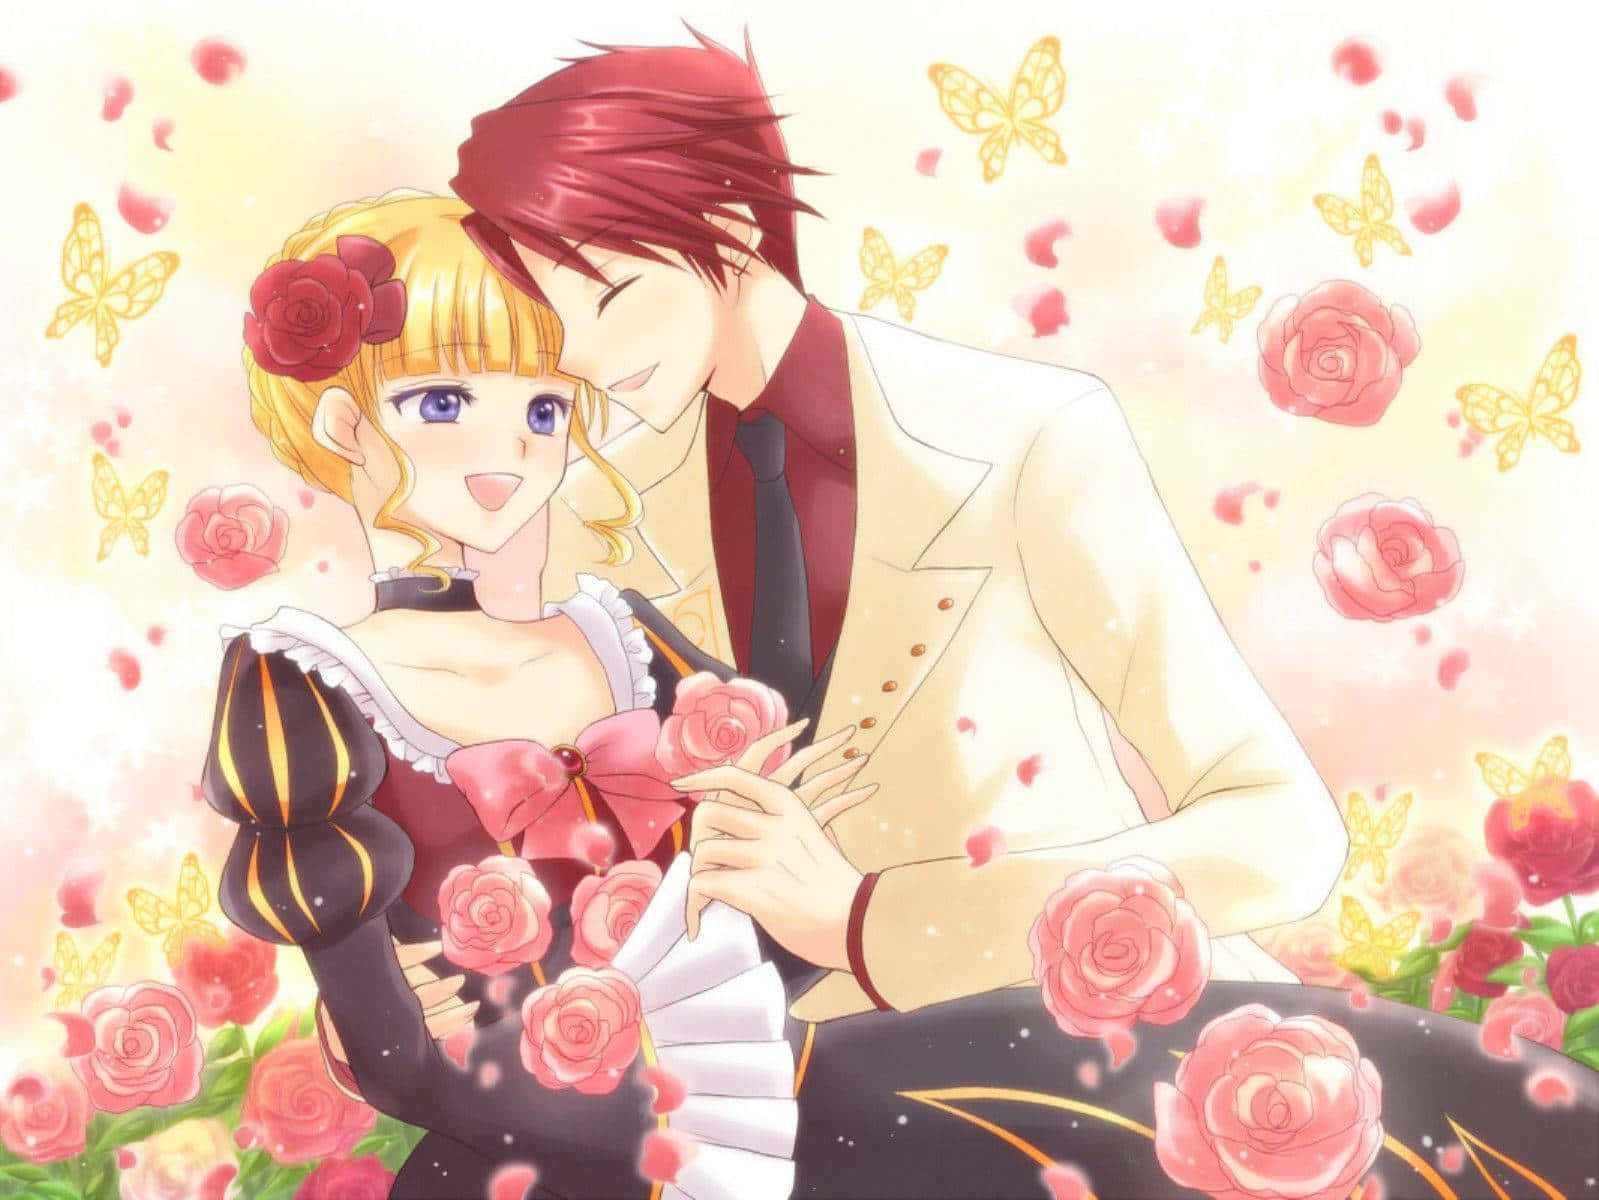 Battler Ushiromiya And Beatrice With Pink Roses Romance Anime Wallpaper